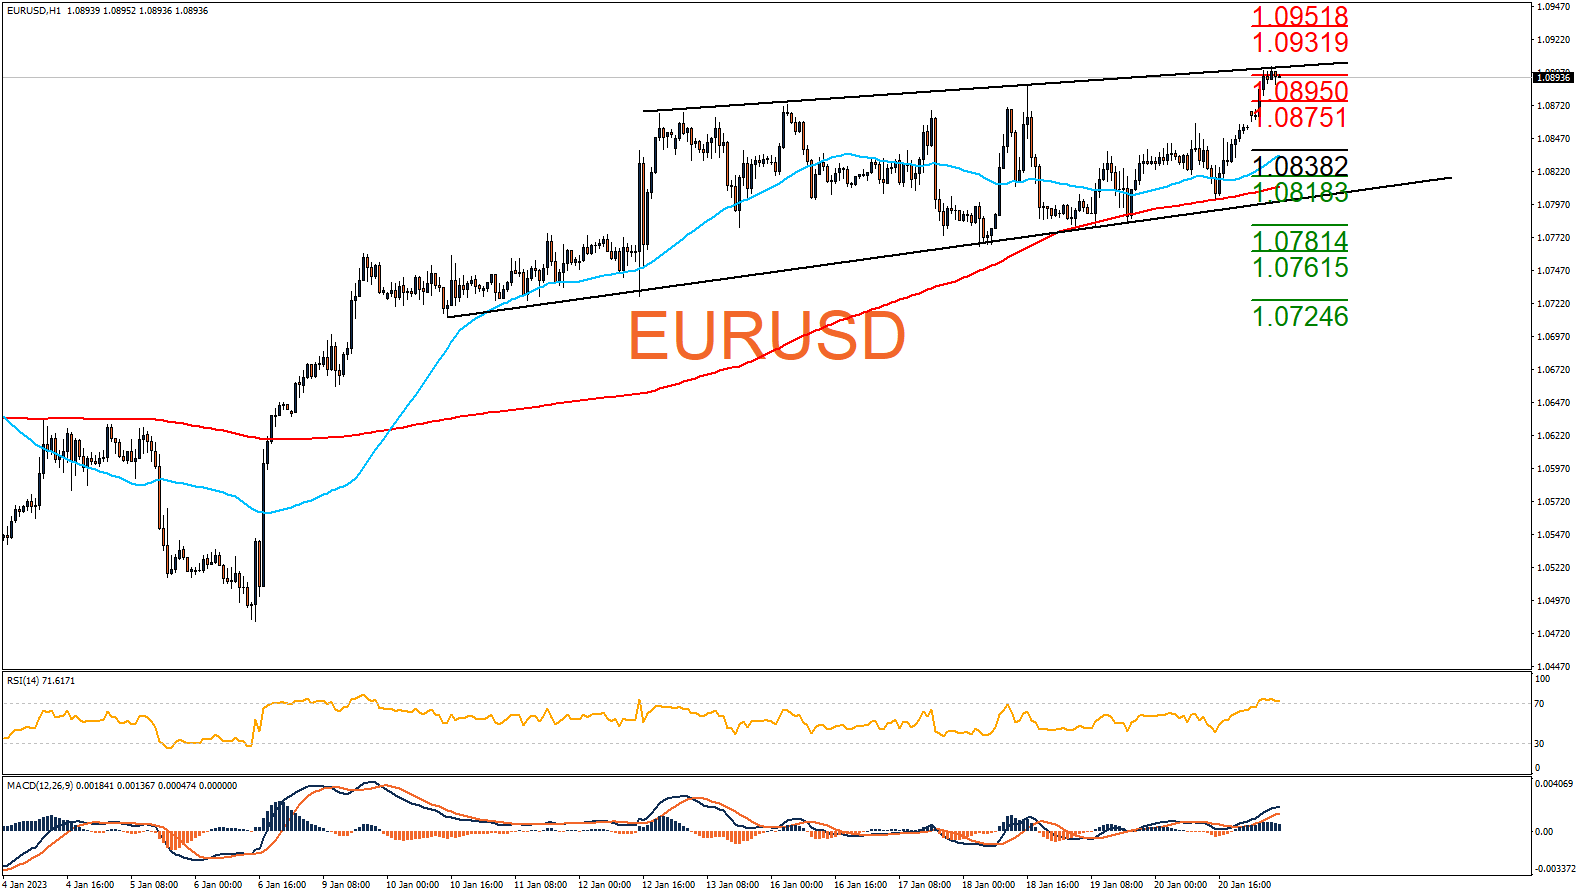 EU session notes: Euro edges higher amid pressured US dollar